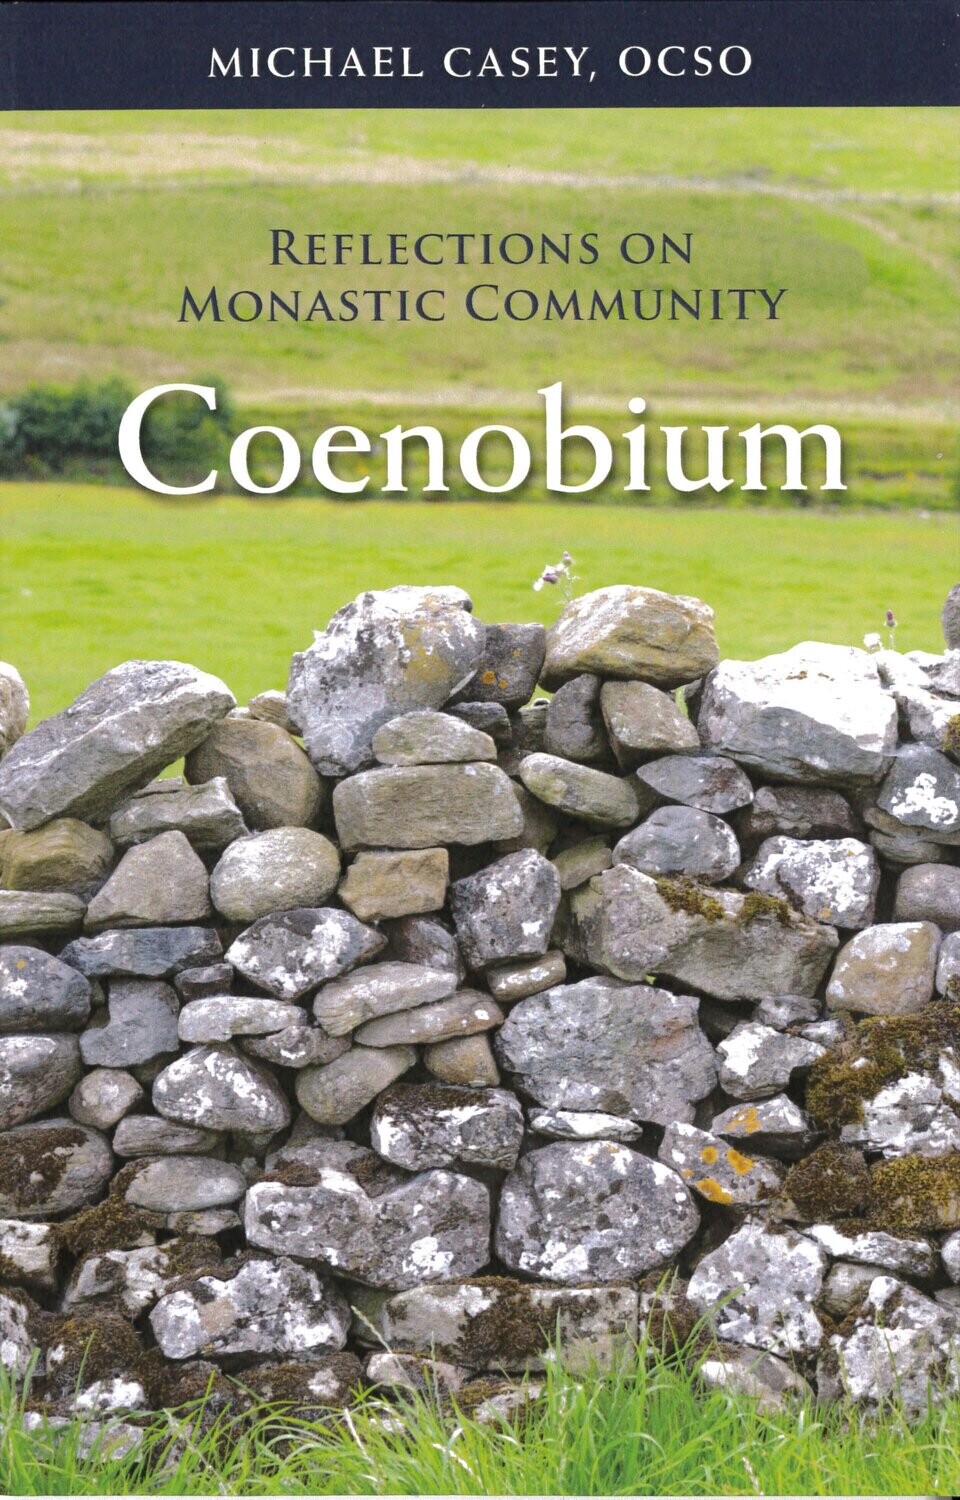 Coenobium: Reflections on Monastic Community by Michael Casey